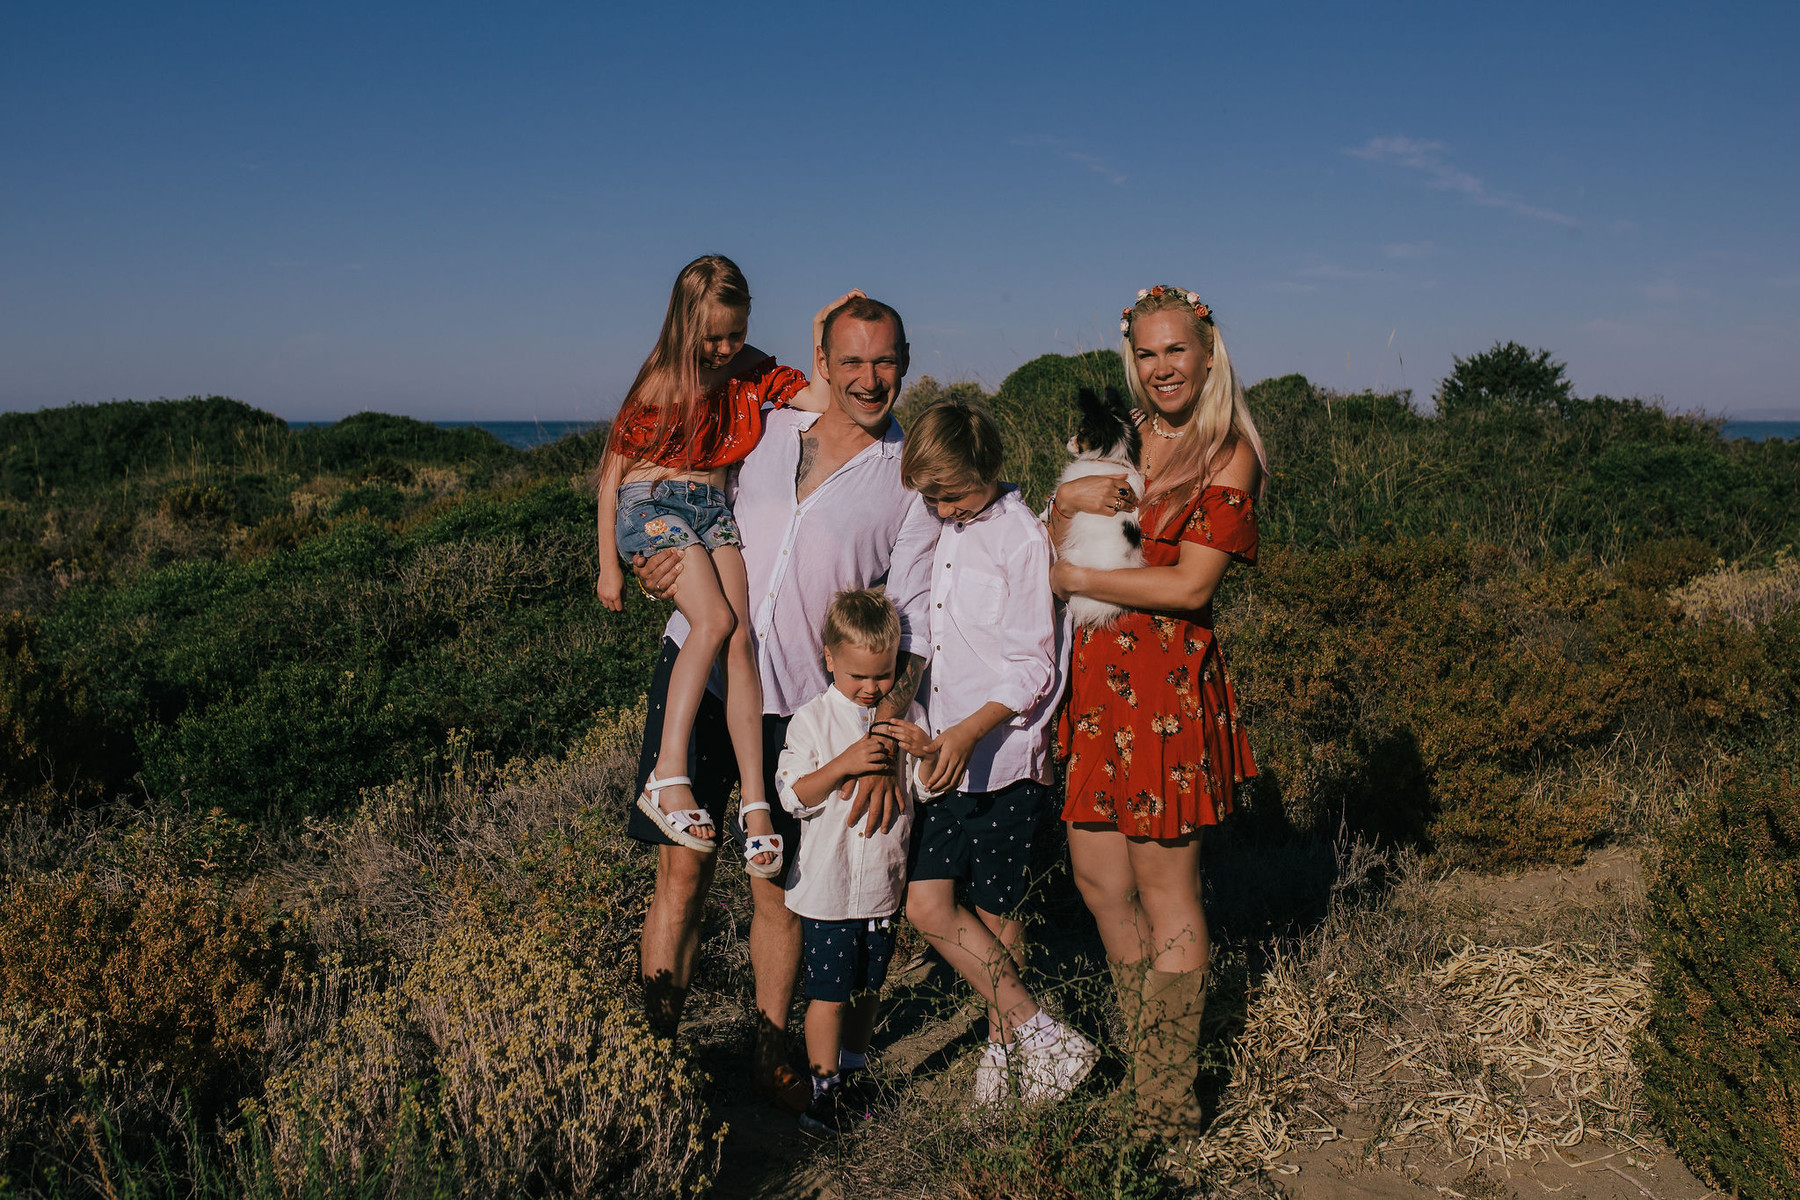 Family photo shoot in bohemian style in Marbella